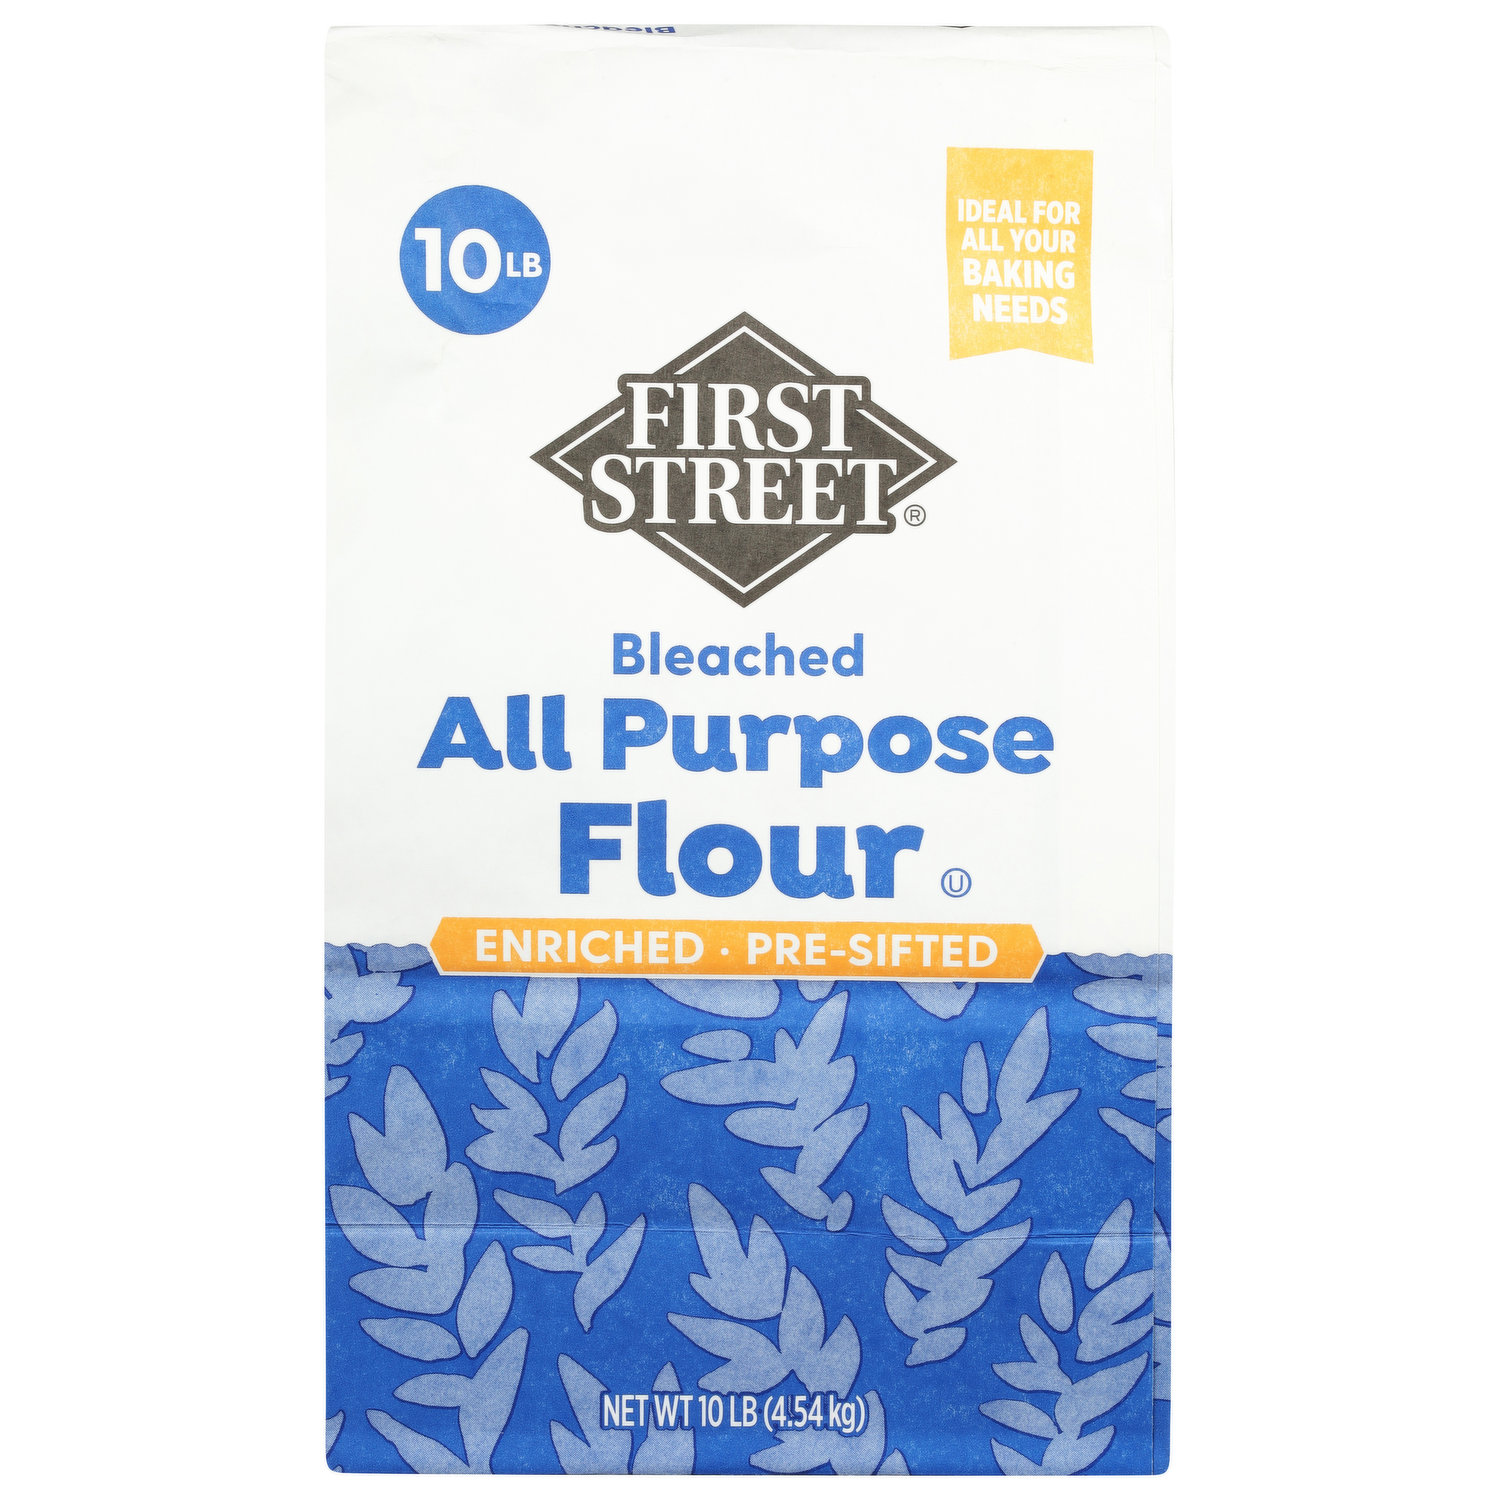 All-Purpose Original Flour, Baking Products